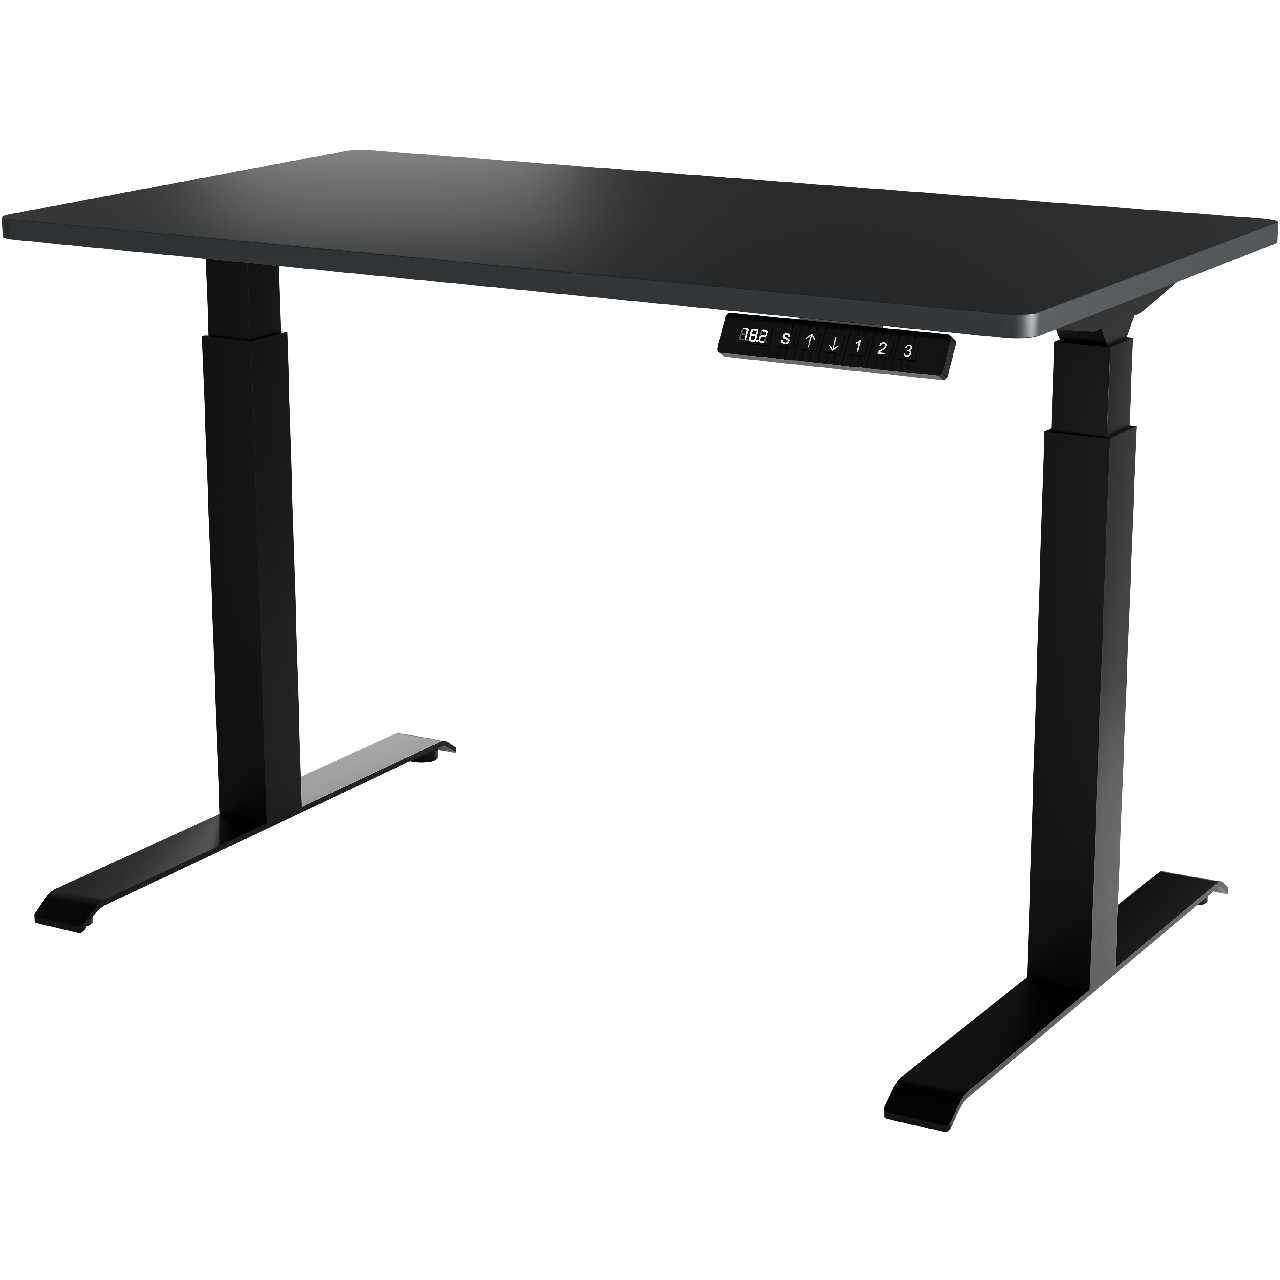 Písací stôl s nastaviteľnou výškou MOON čierny / antracit